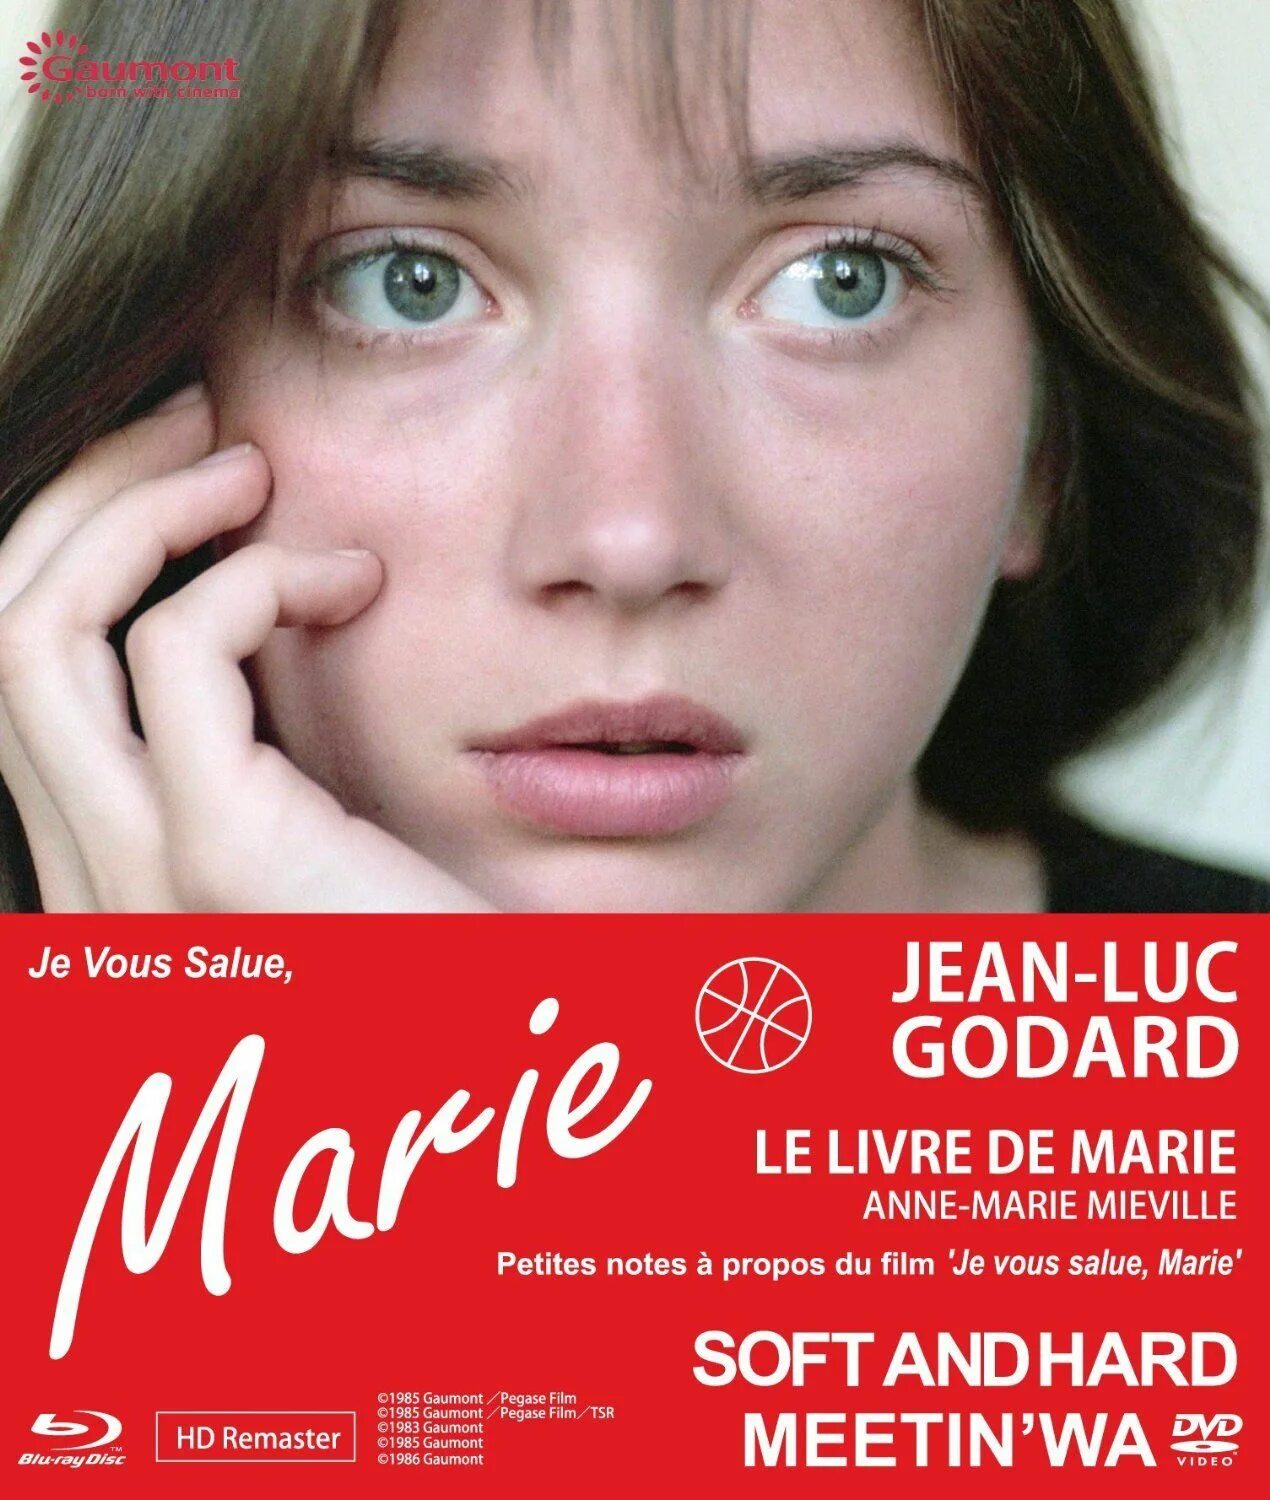 Le livre de Marie (1985) актриса. Анн Мари Мьевиль и Годар фото. Je marie